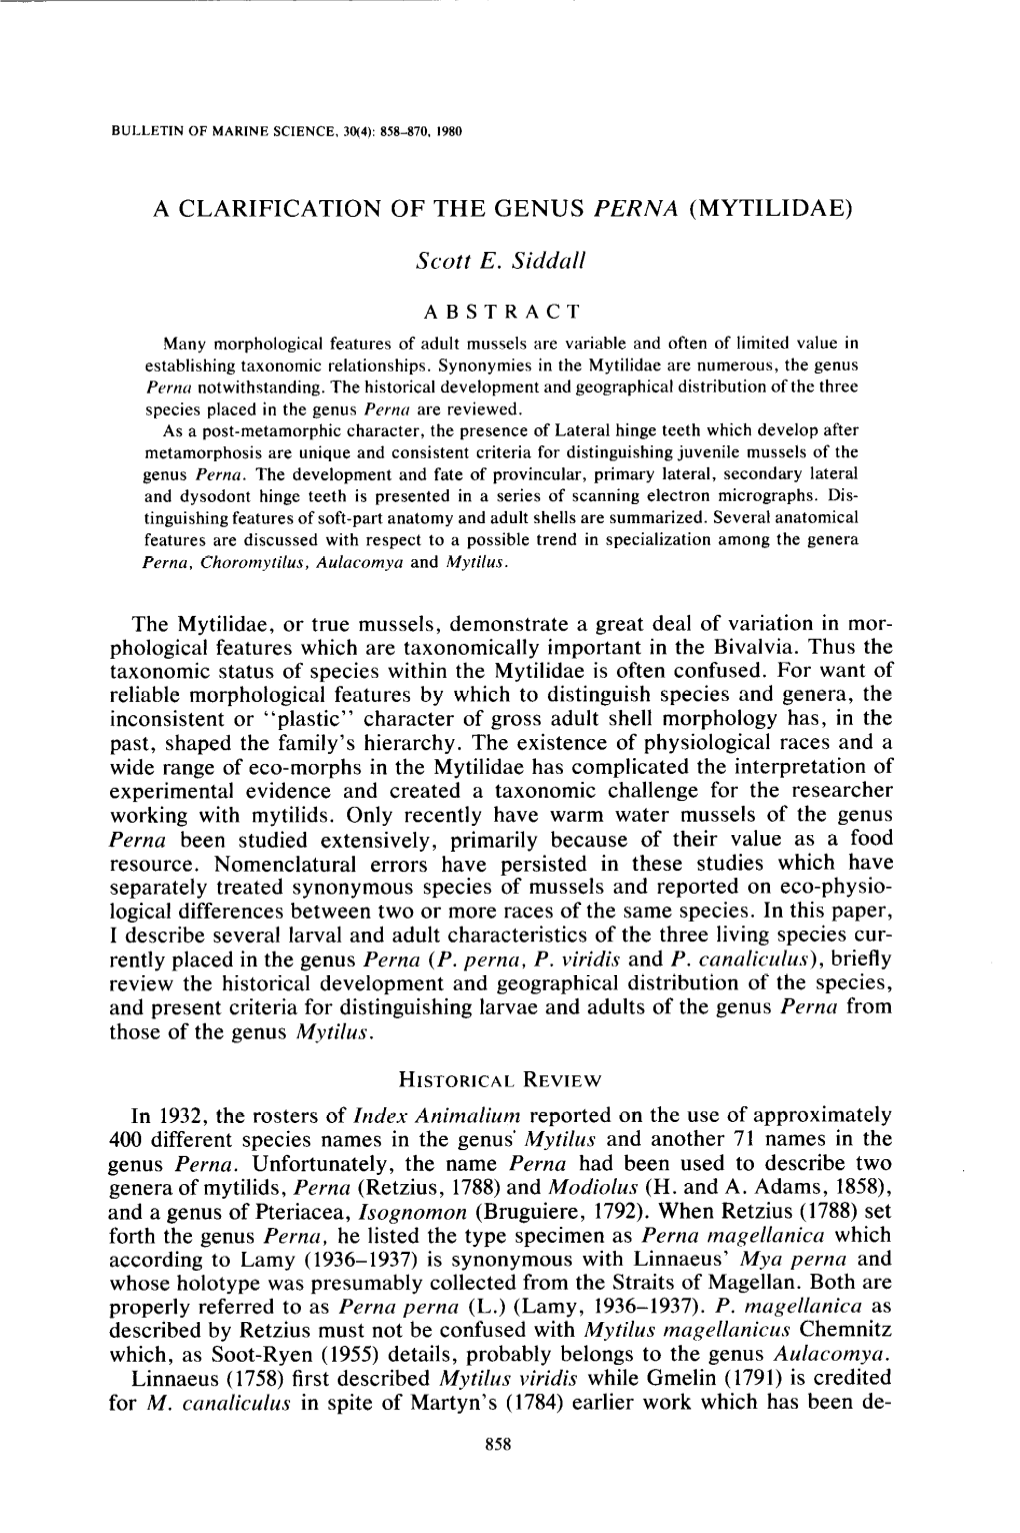 A CLARIFICATION of the GENUS PERNA (MYTILIDAE) Scott E. Siddull